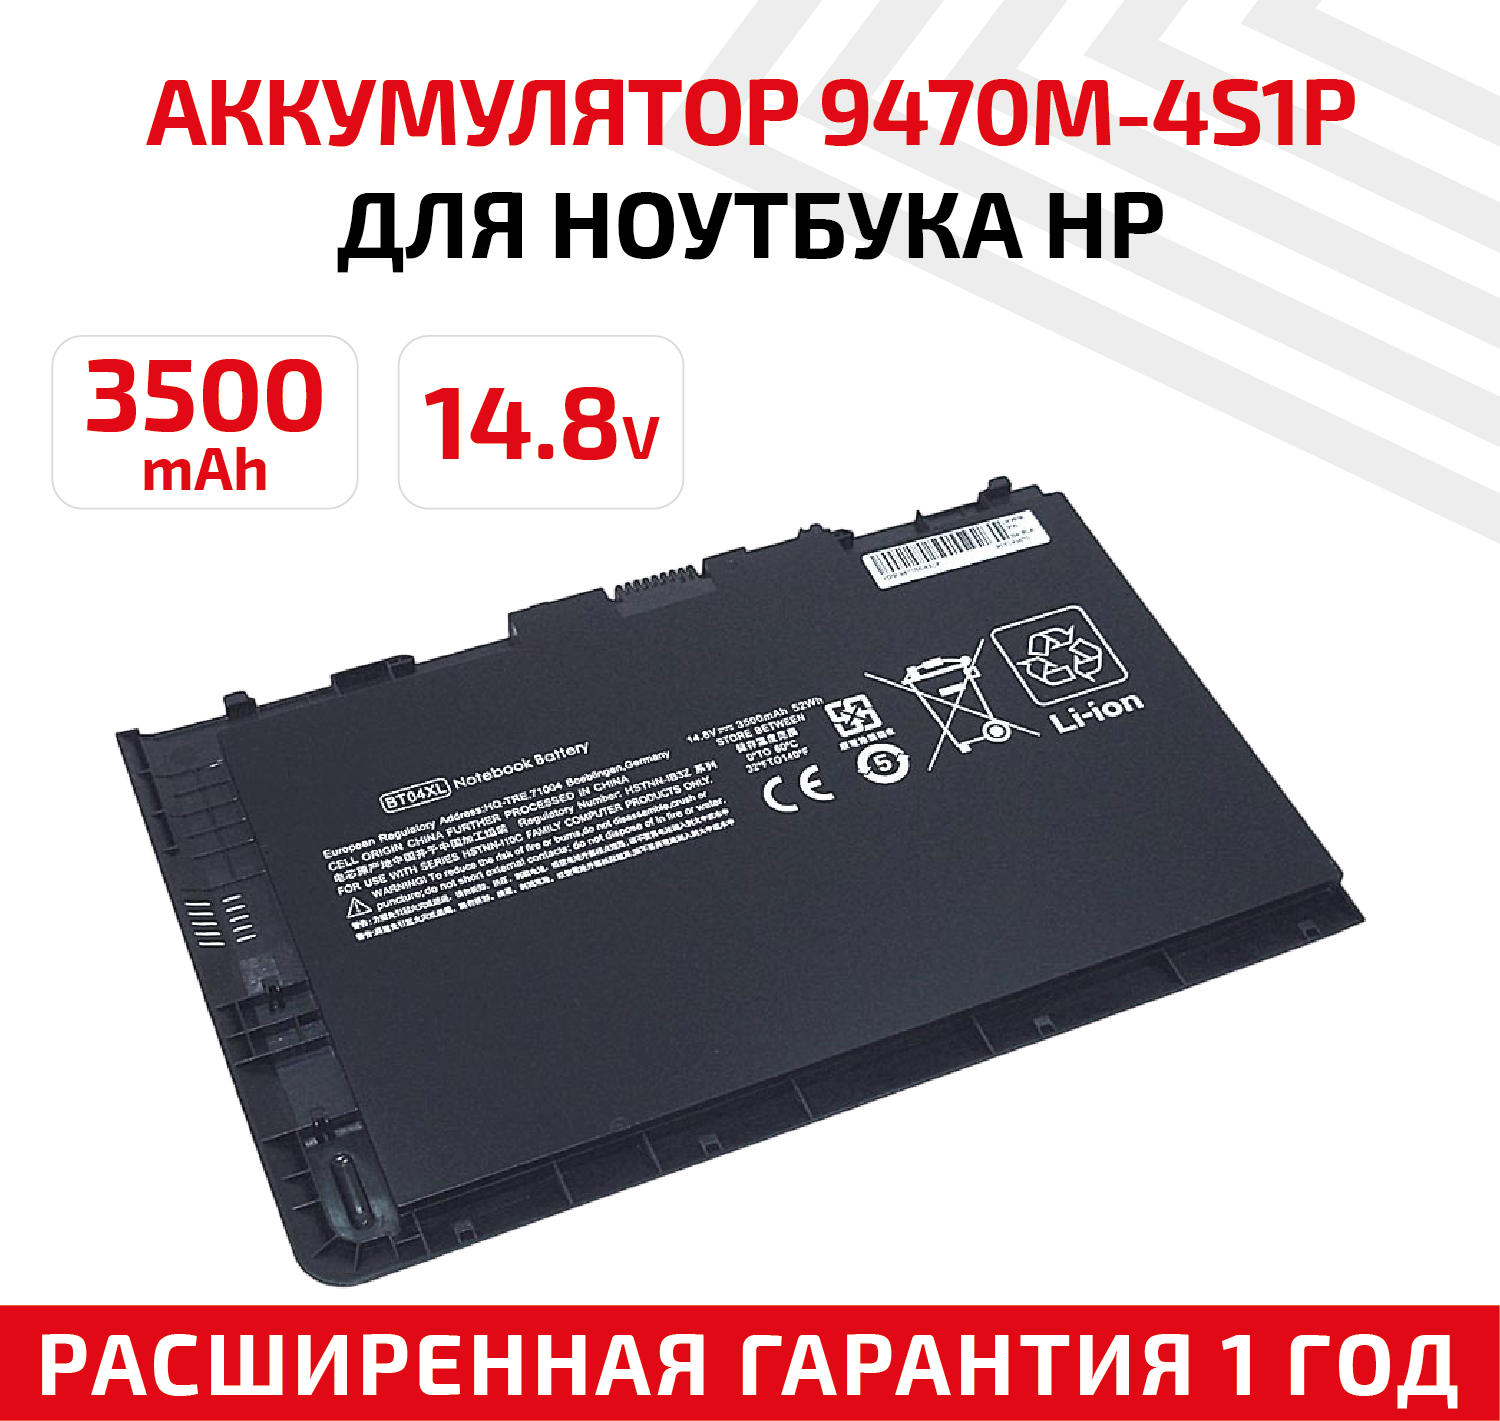 Аккумулятор (АКБ, аккумуляторная батарея) 9470M-4S1P для ноутбука HP EliteBook Folio 9470m, 14.8В, 3500мАч, черный